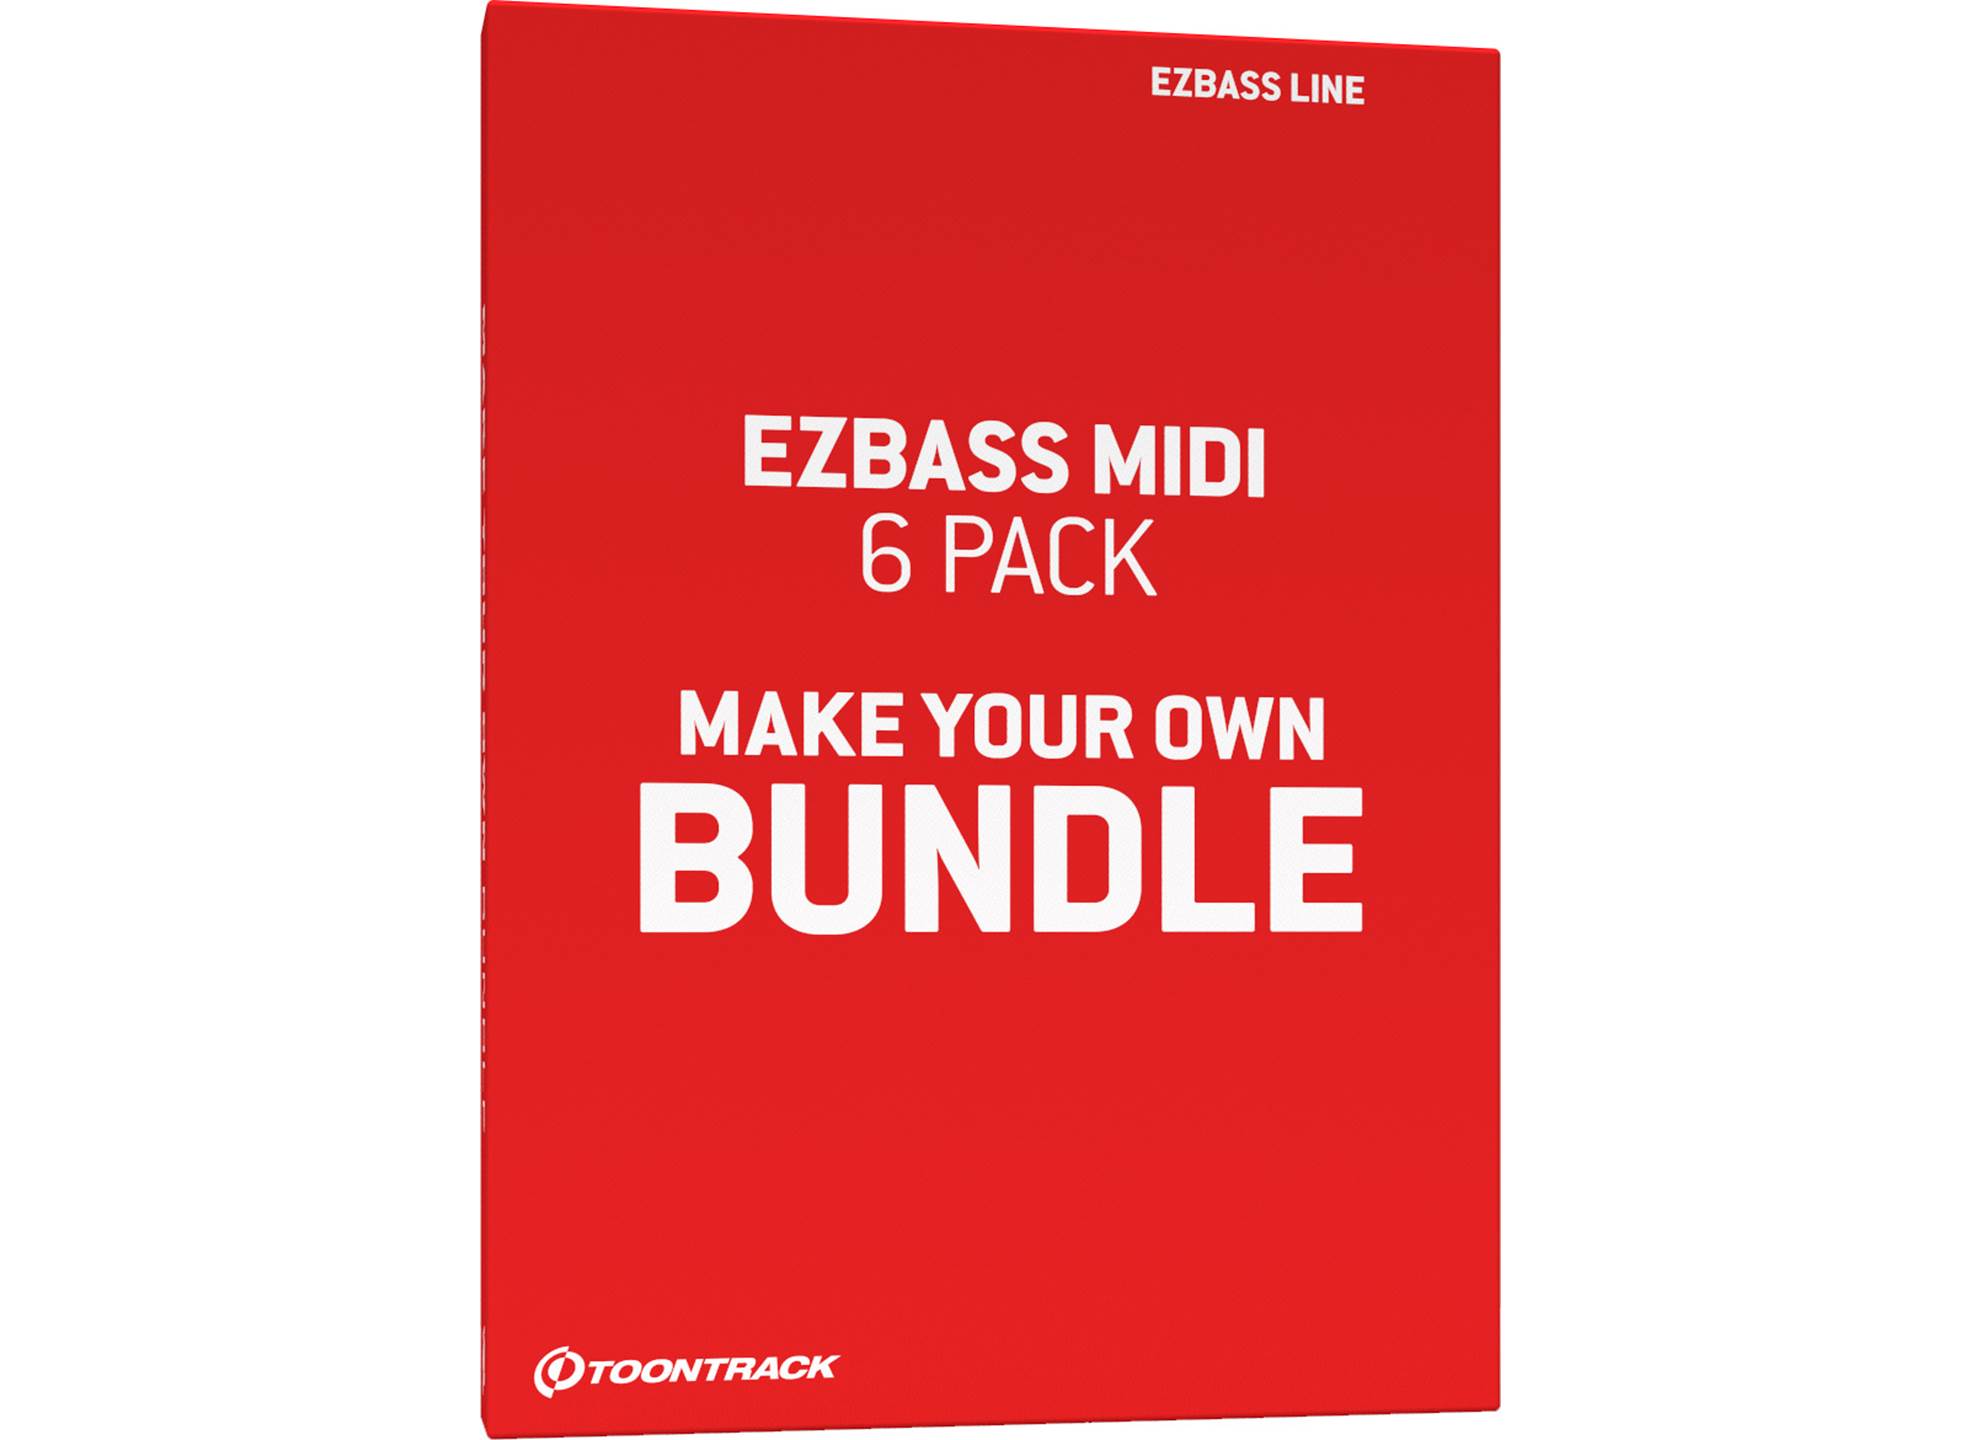 EZbass MIDI 6 Pack